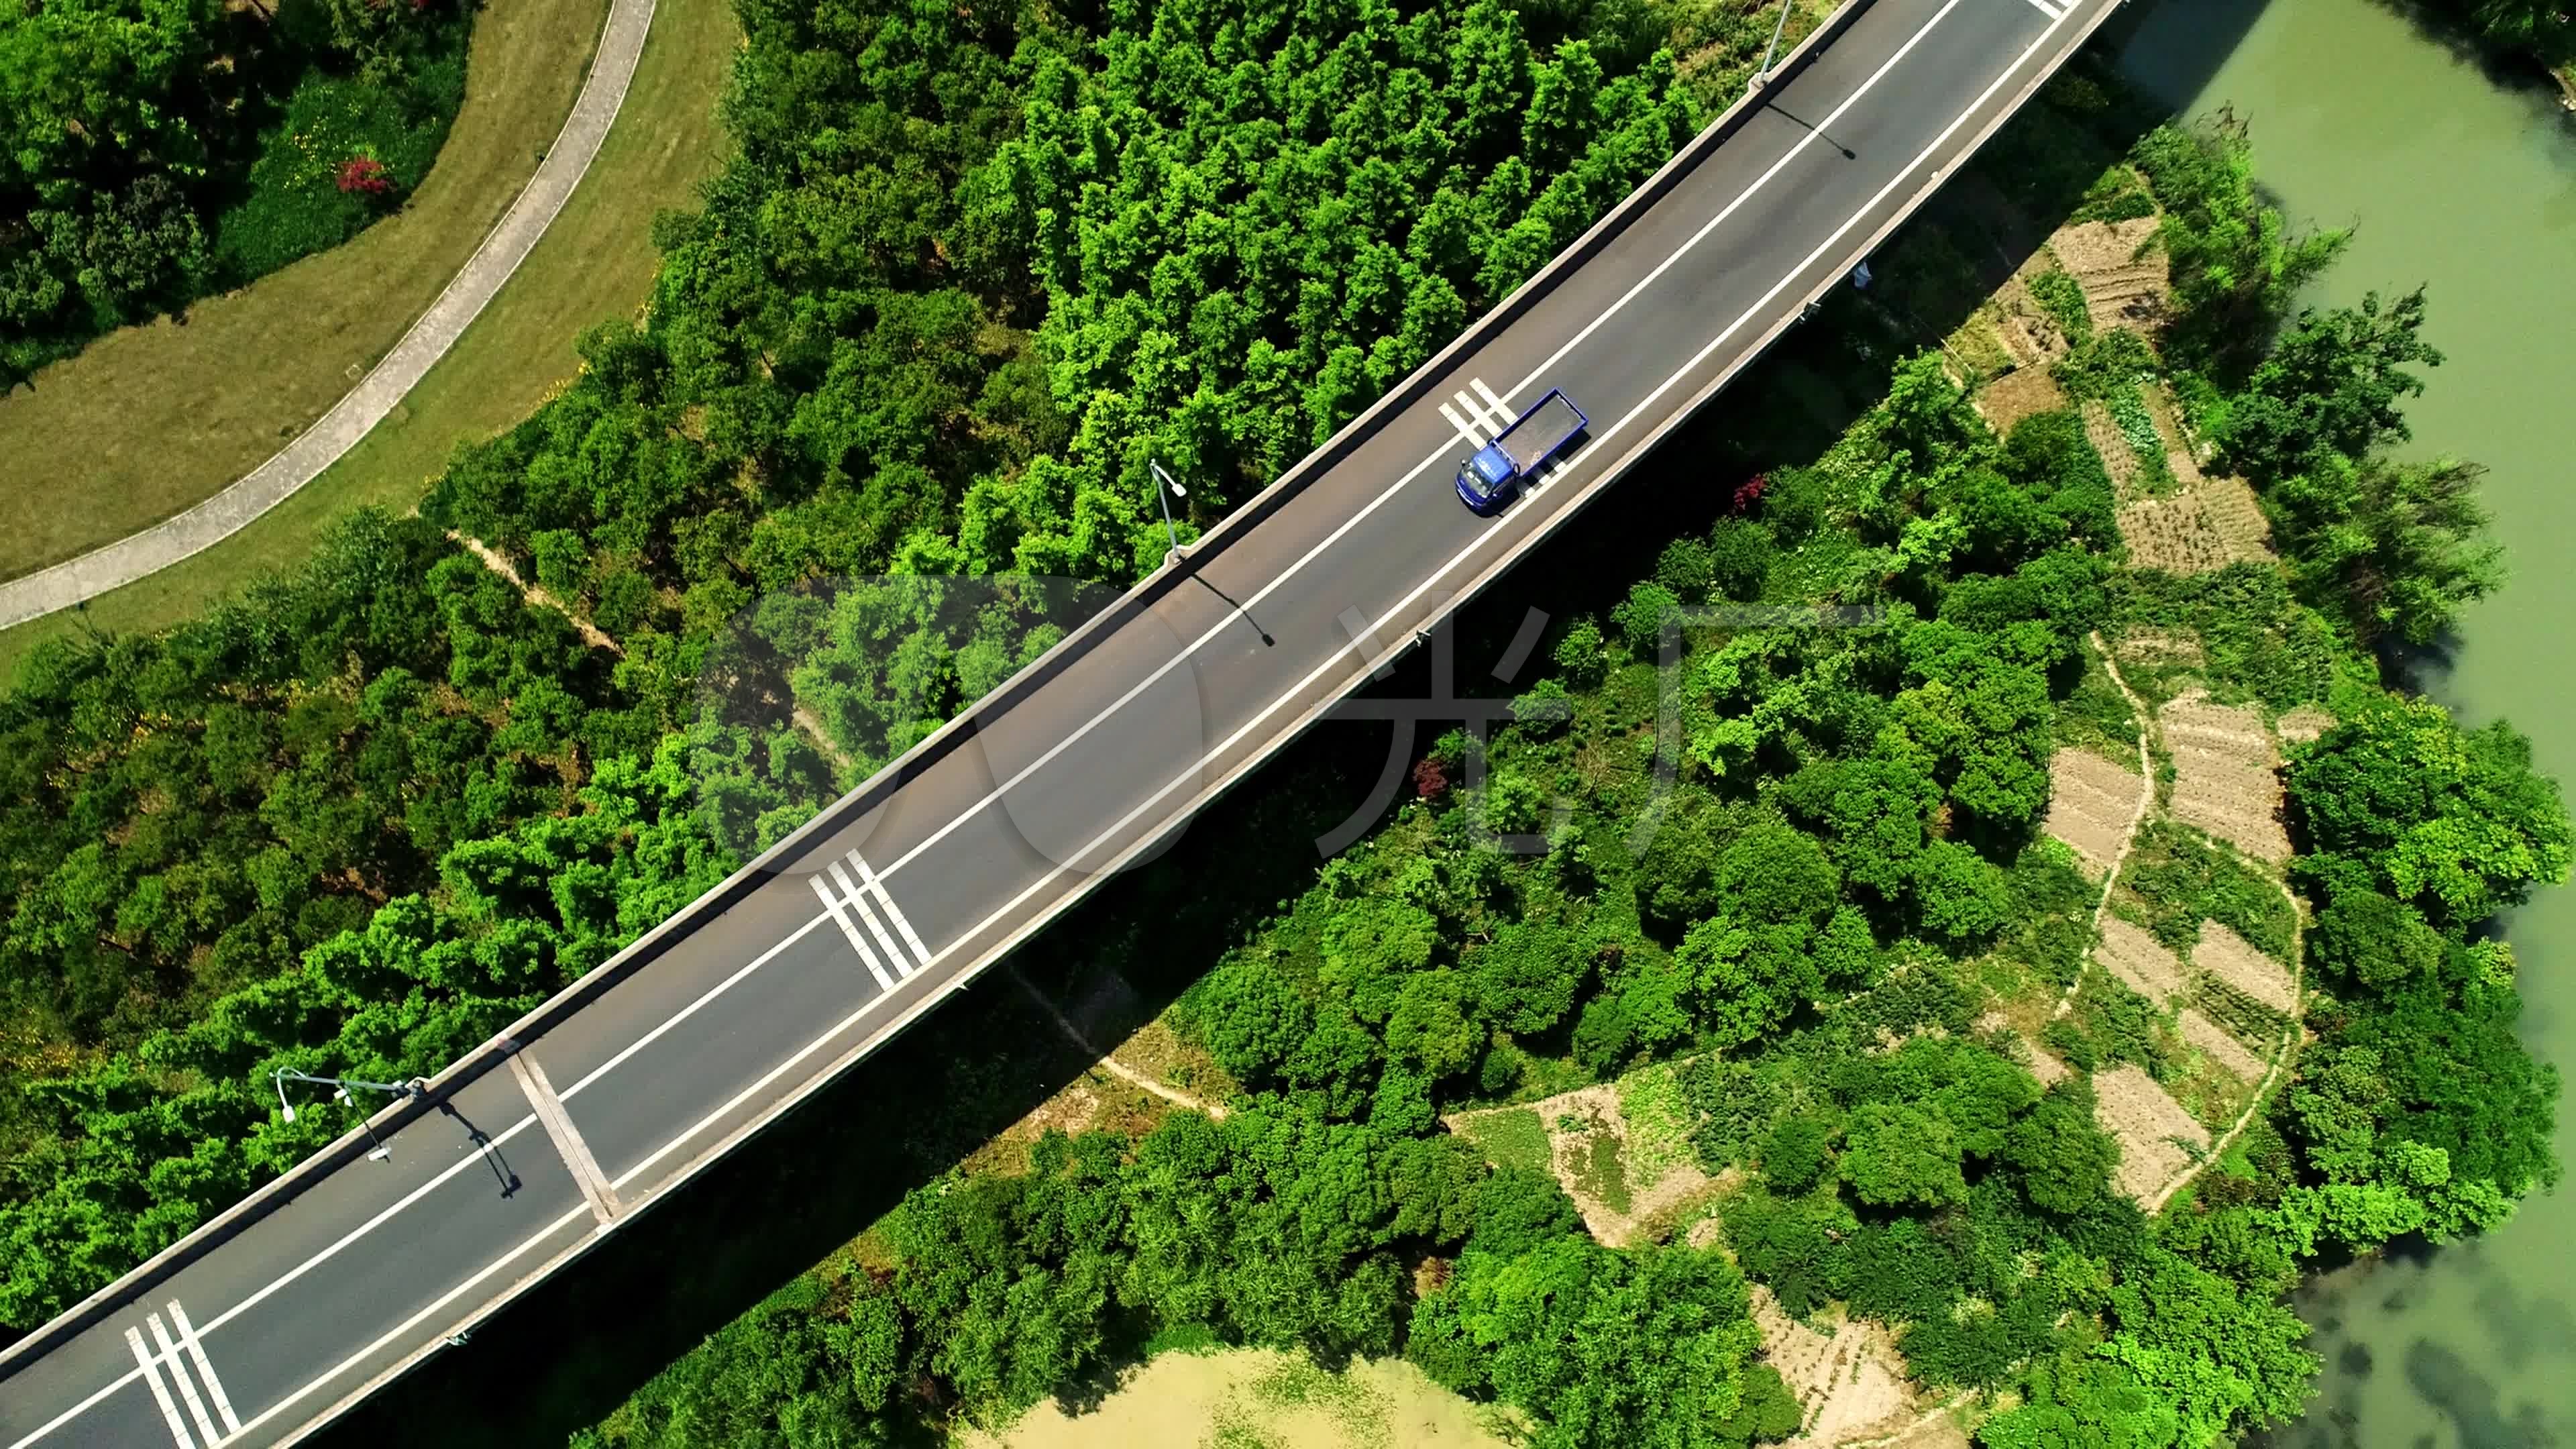 G7京新高速高清图片下载-正版图片500706635-摄图网